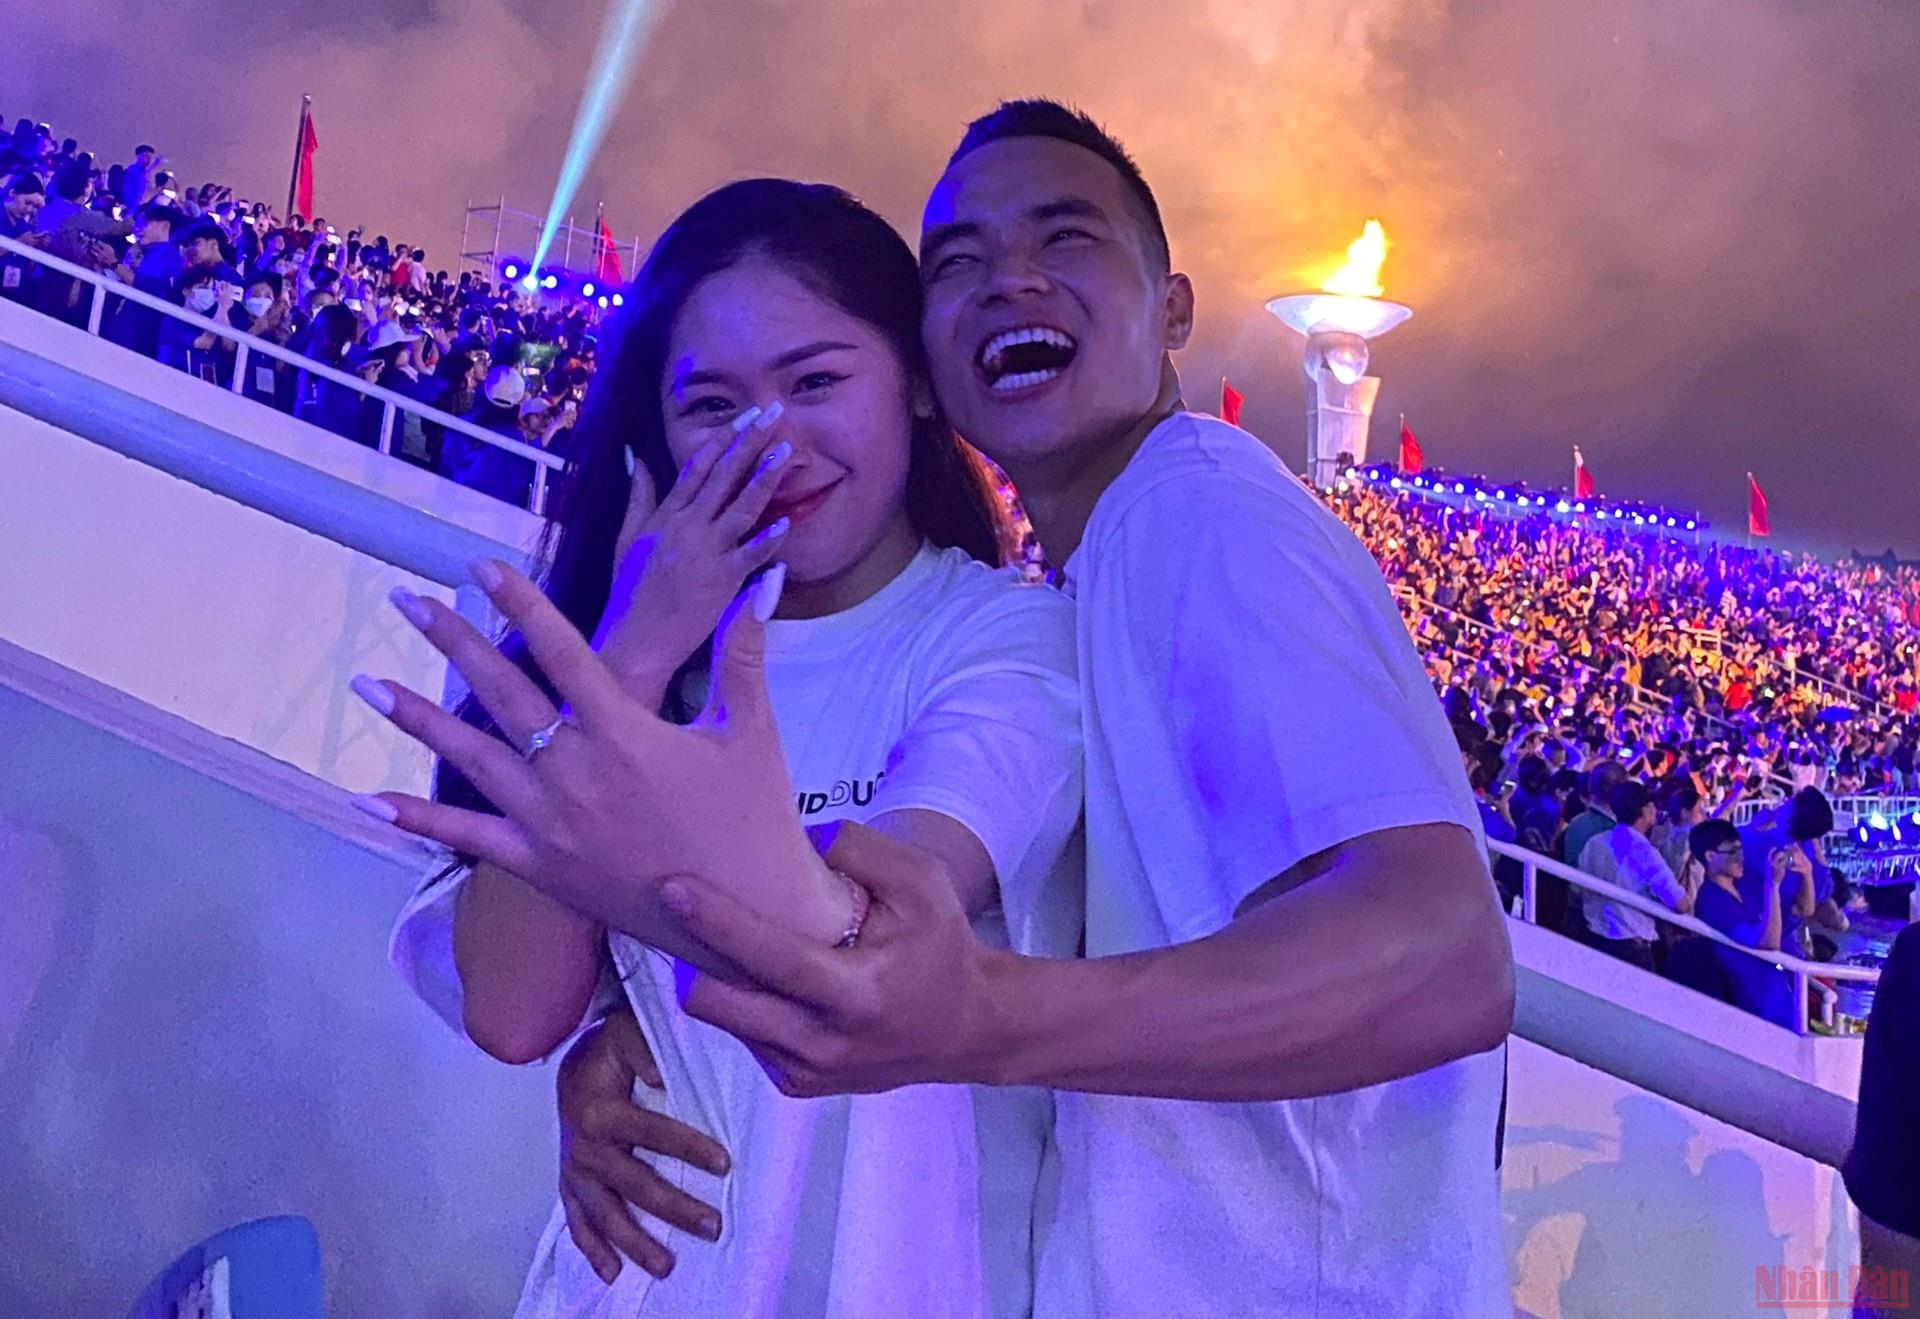 Anh Ngọc Tiến cầu hôn chị Bảo Ly tại lễ khai mạc SEA Games 31 vừa qua